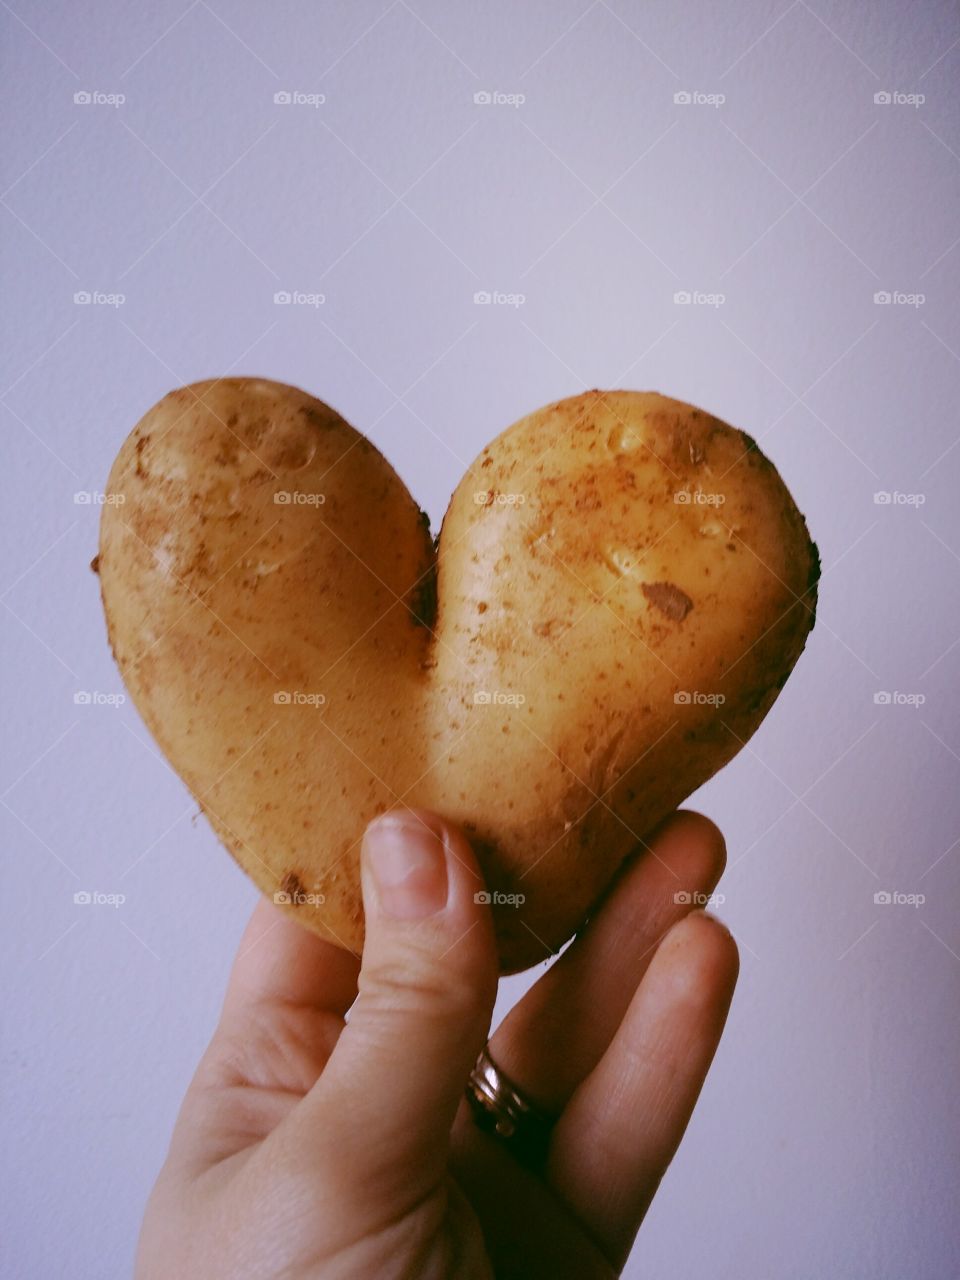 Love potatoes